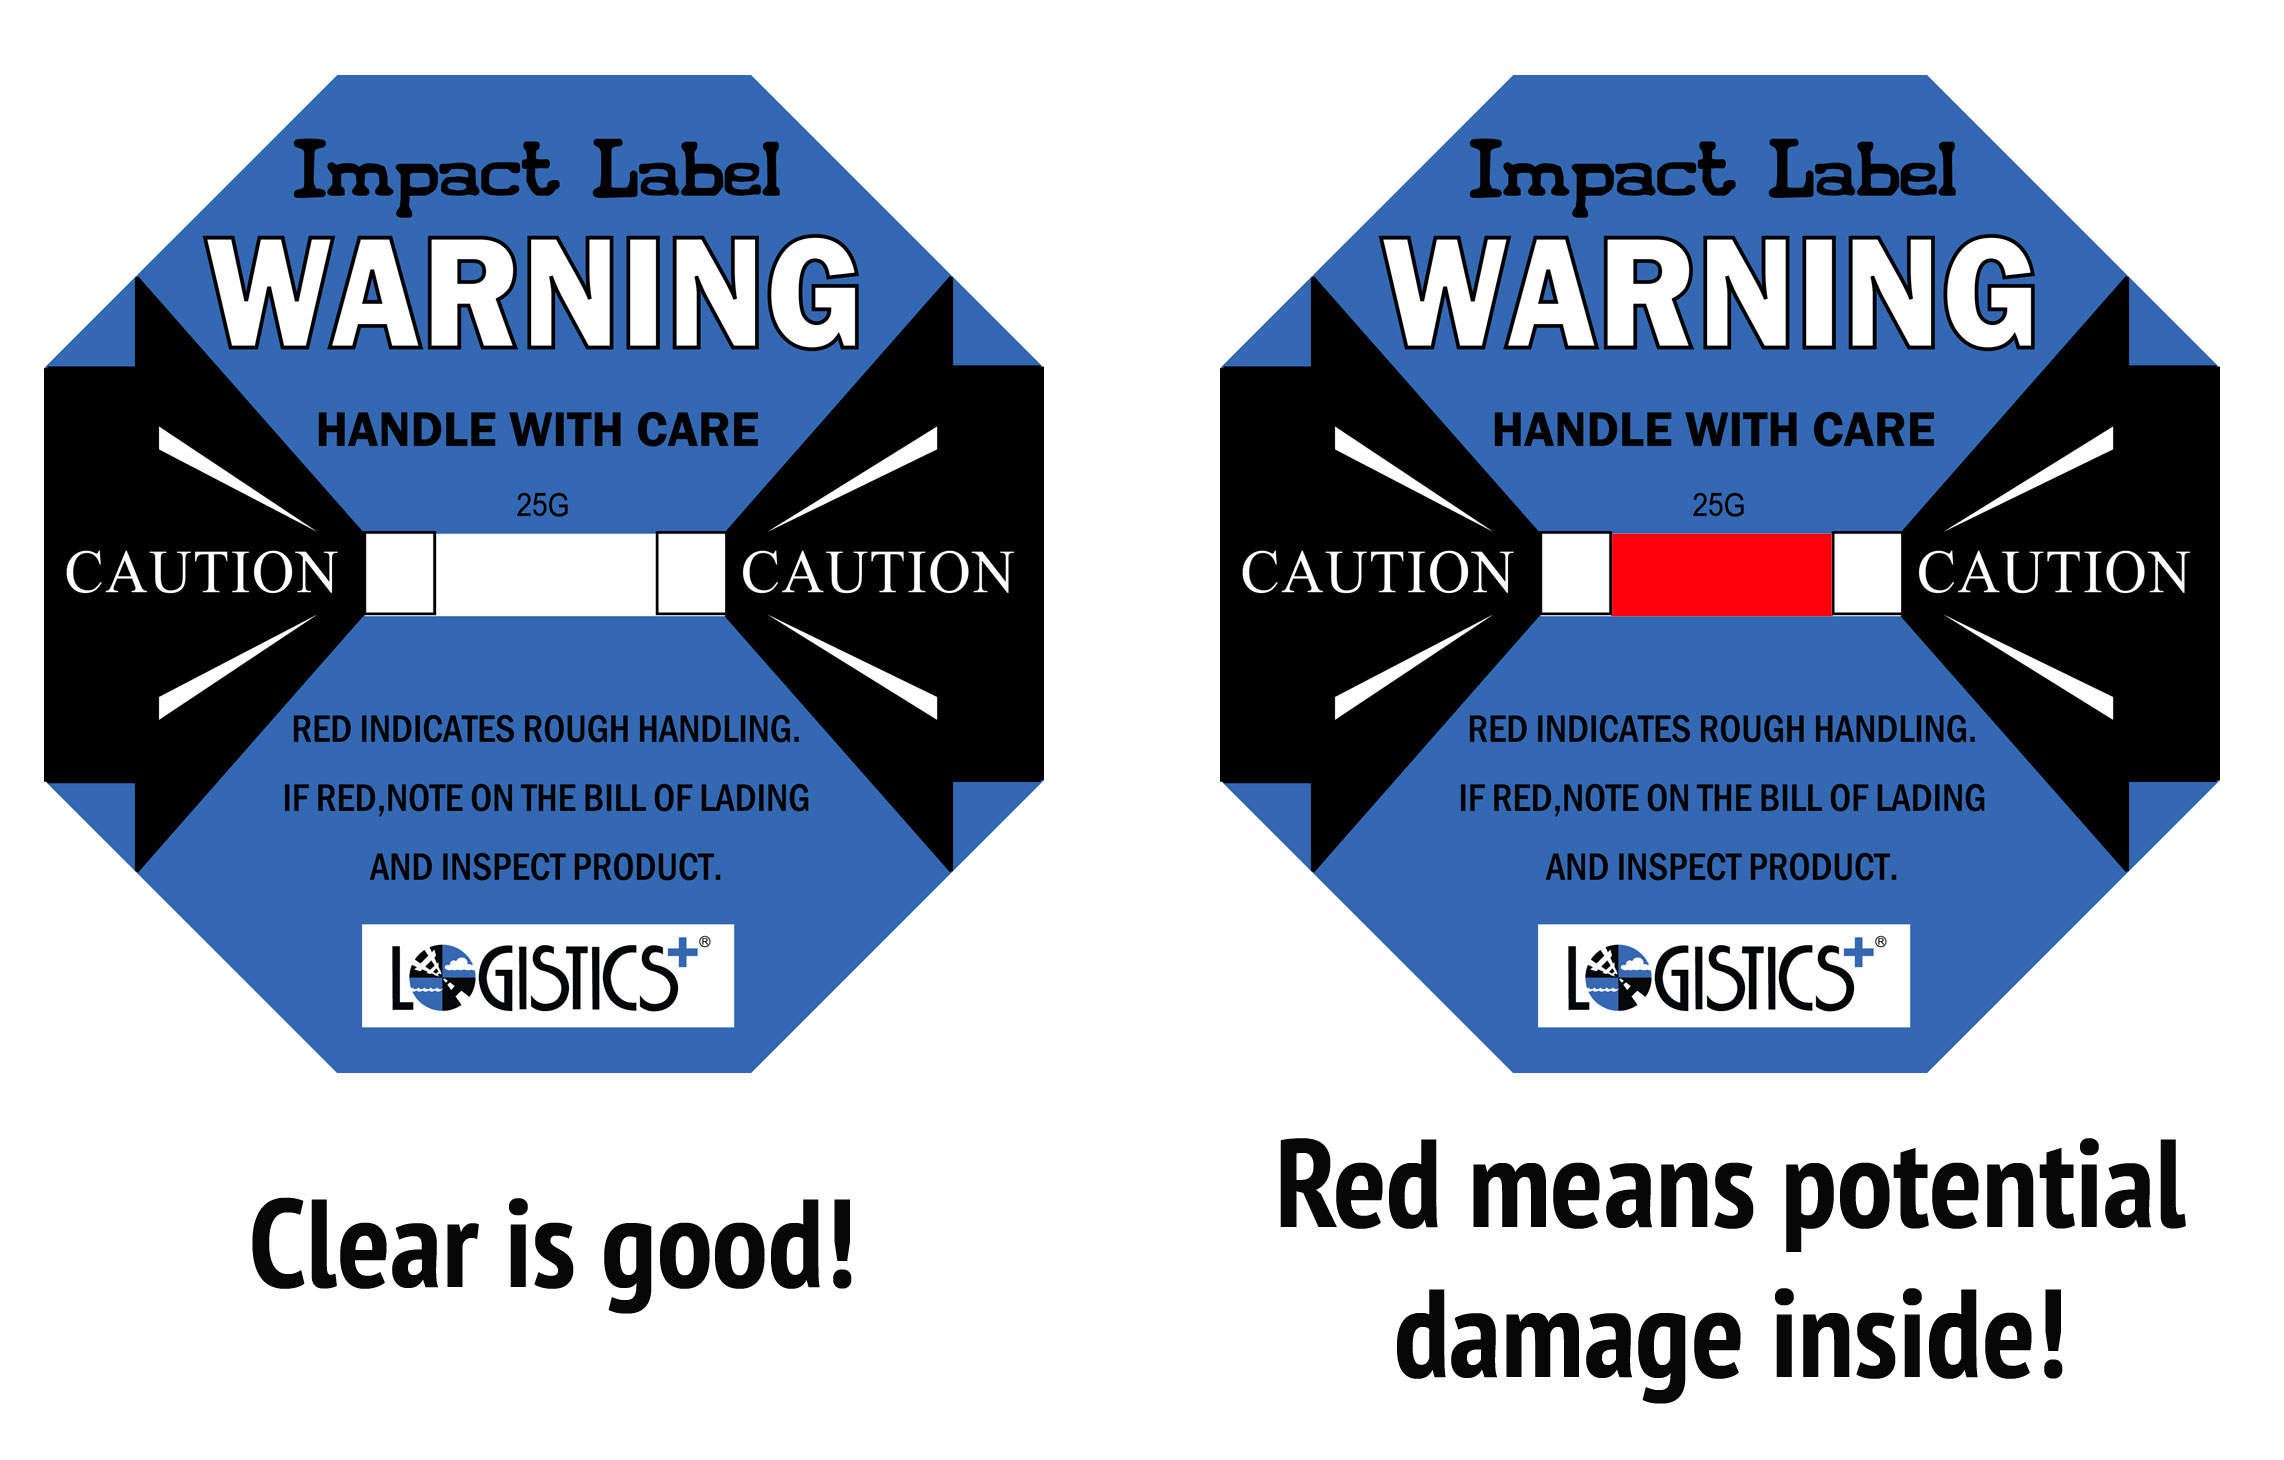 Impact Labels Alert Potential Concealed Damage